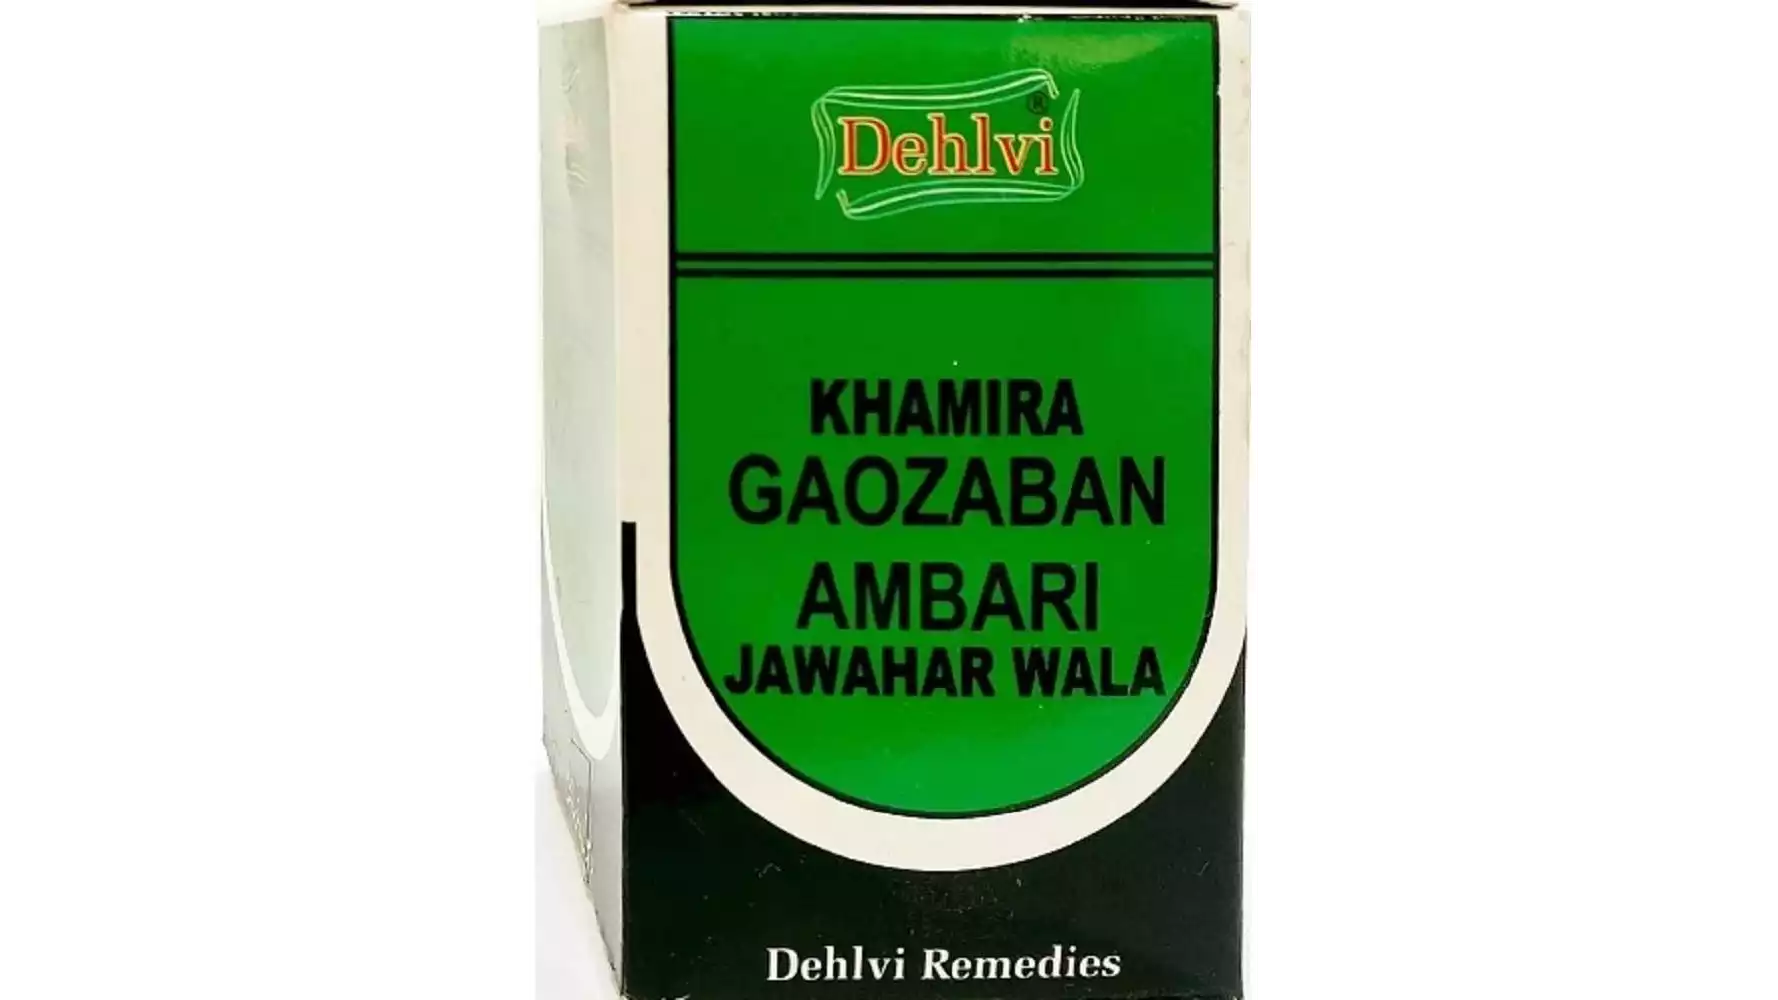 Dehlvi Remedies Khamira Gawzaban Ambari Jawahar Wala (125g)